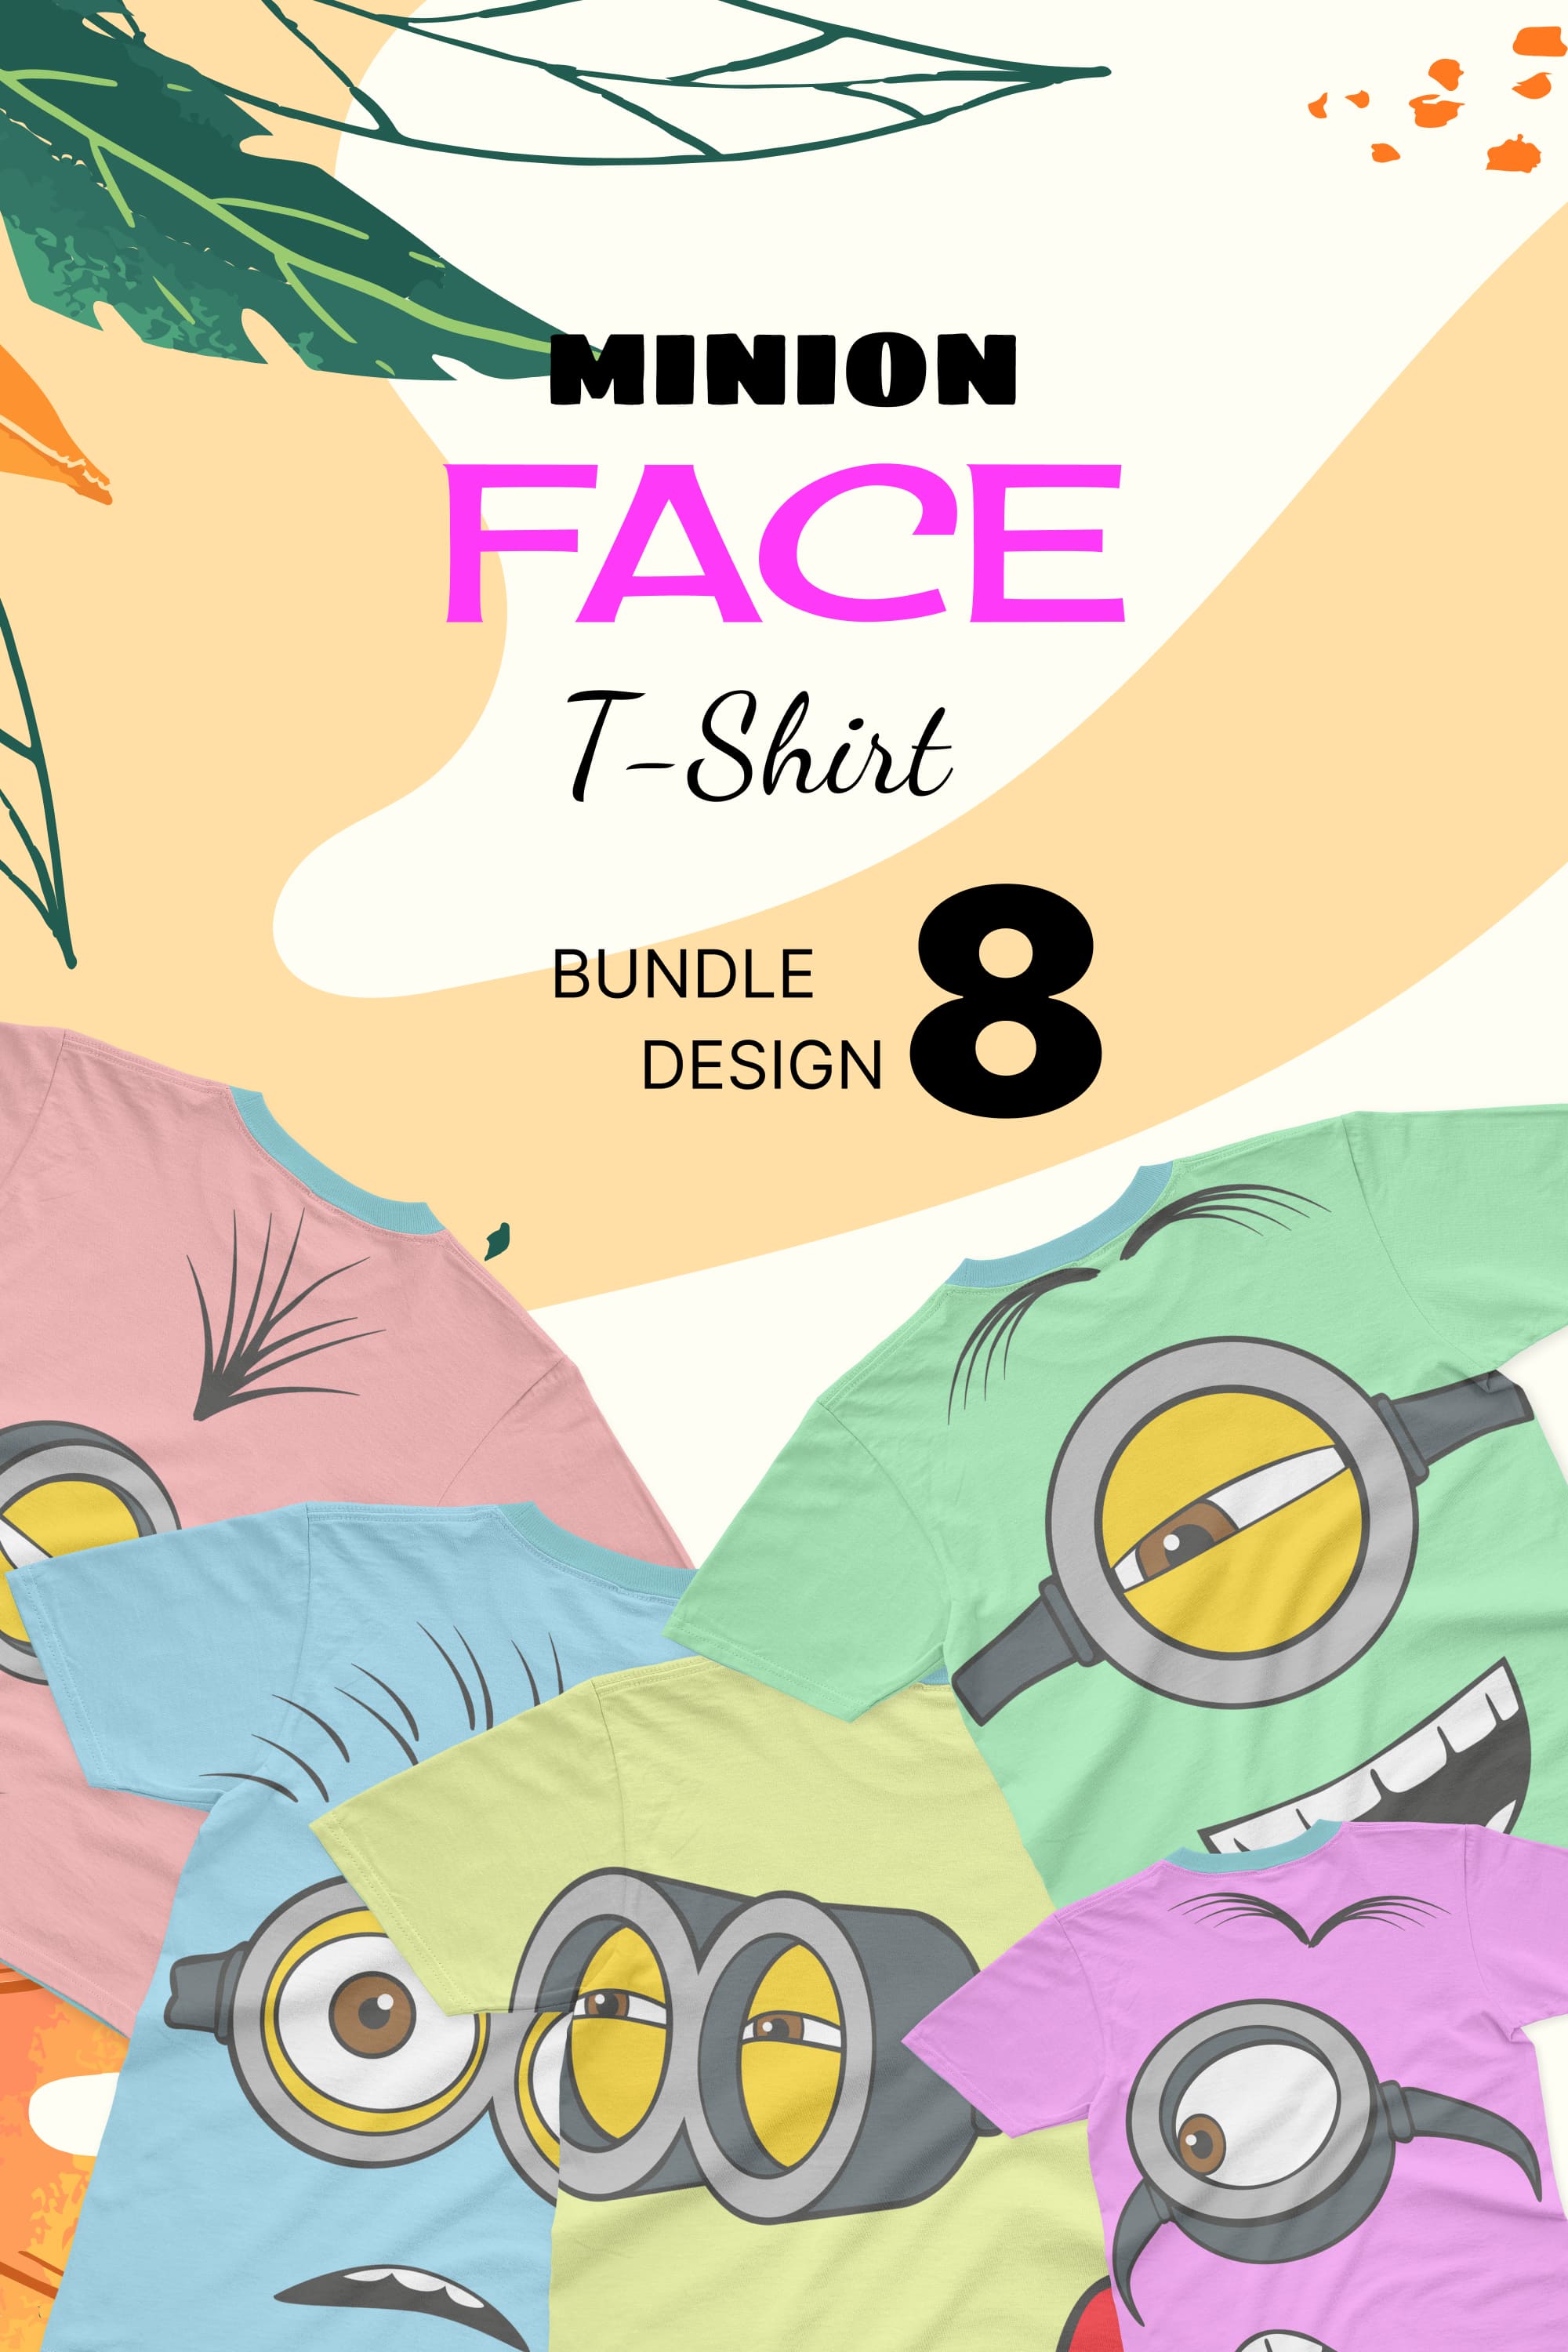 Minion Face T-shirt Designs - Pinterest.